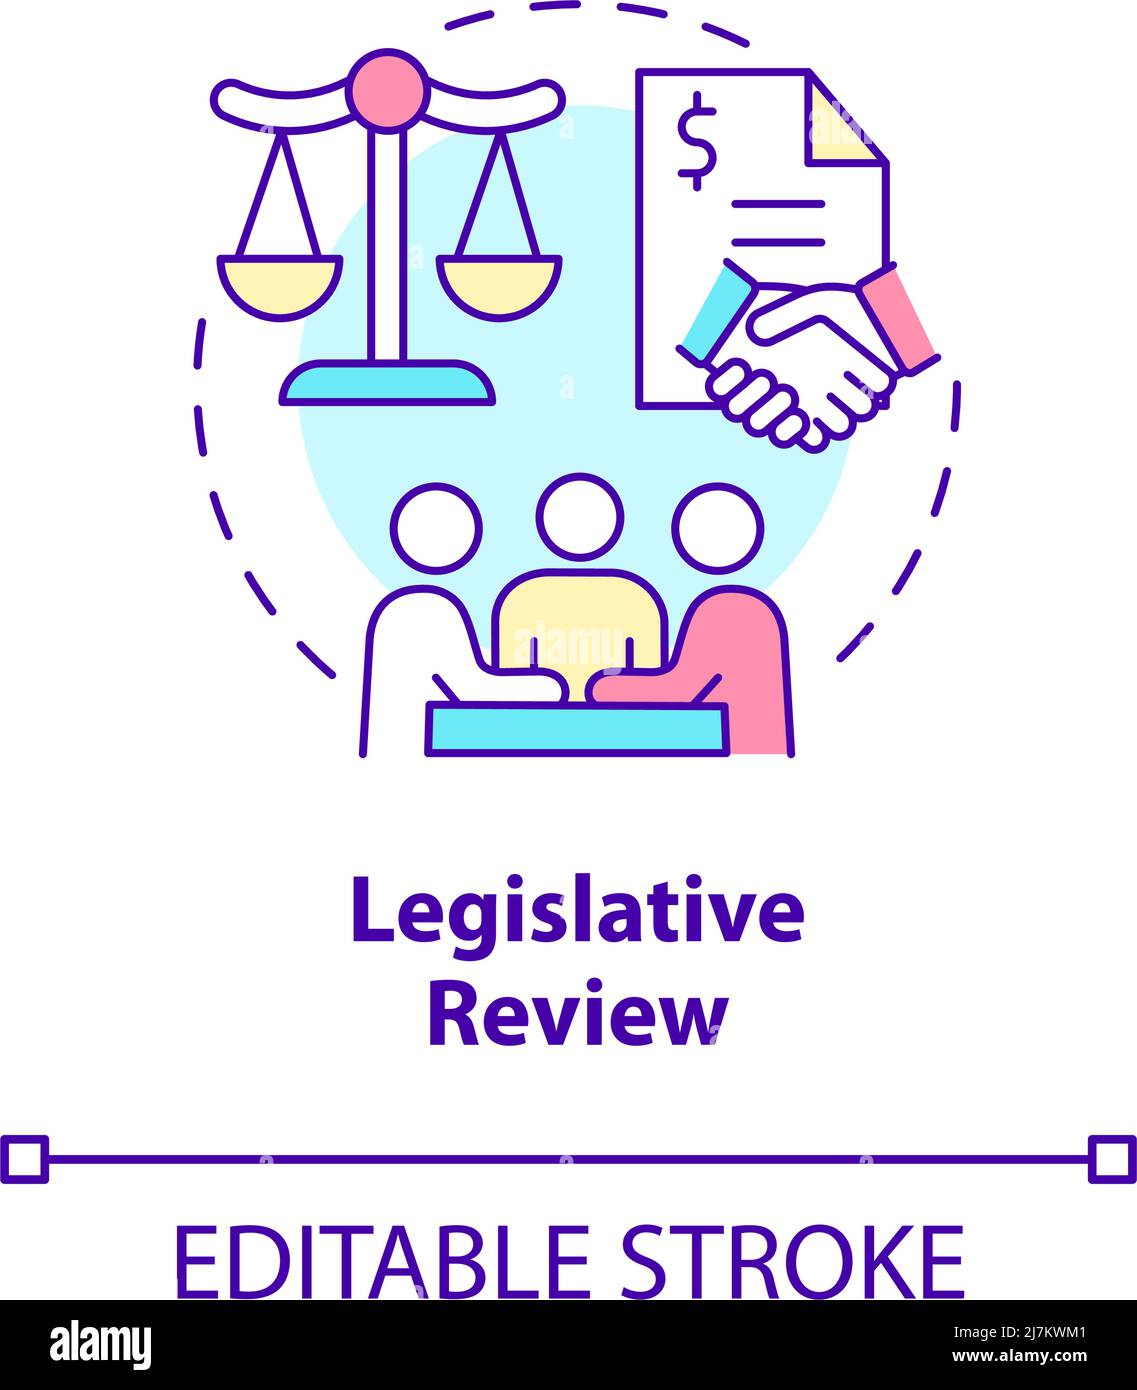 Legislative review concept icon Stock Vector